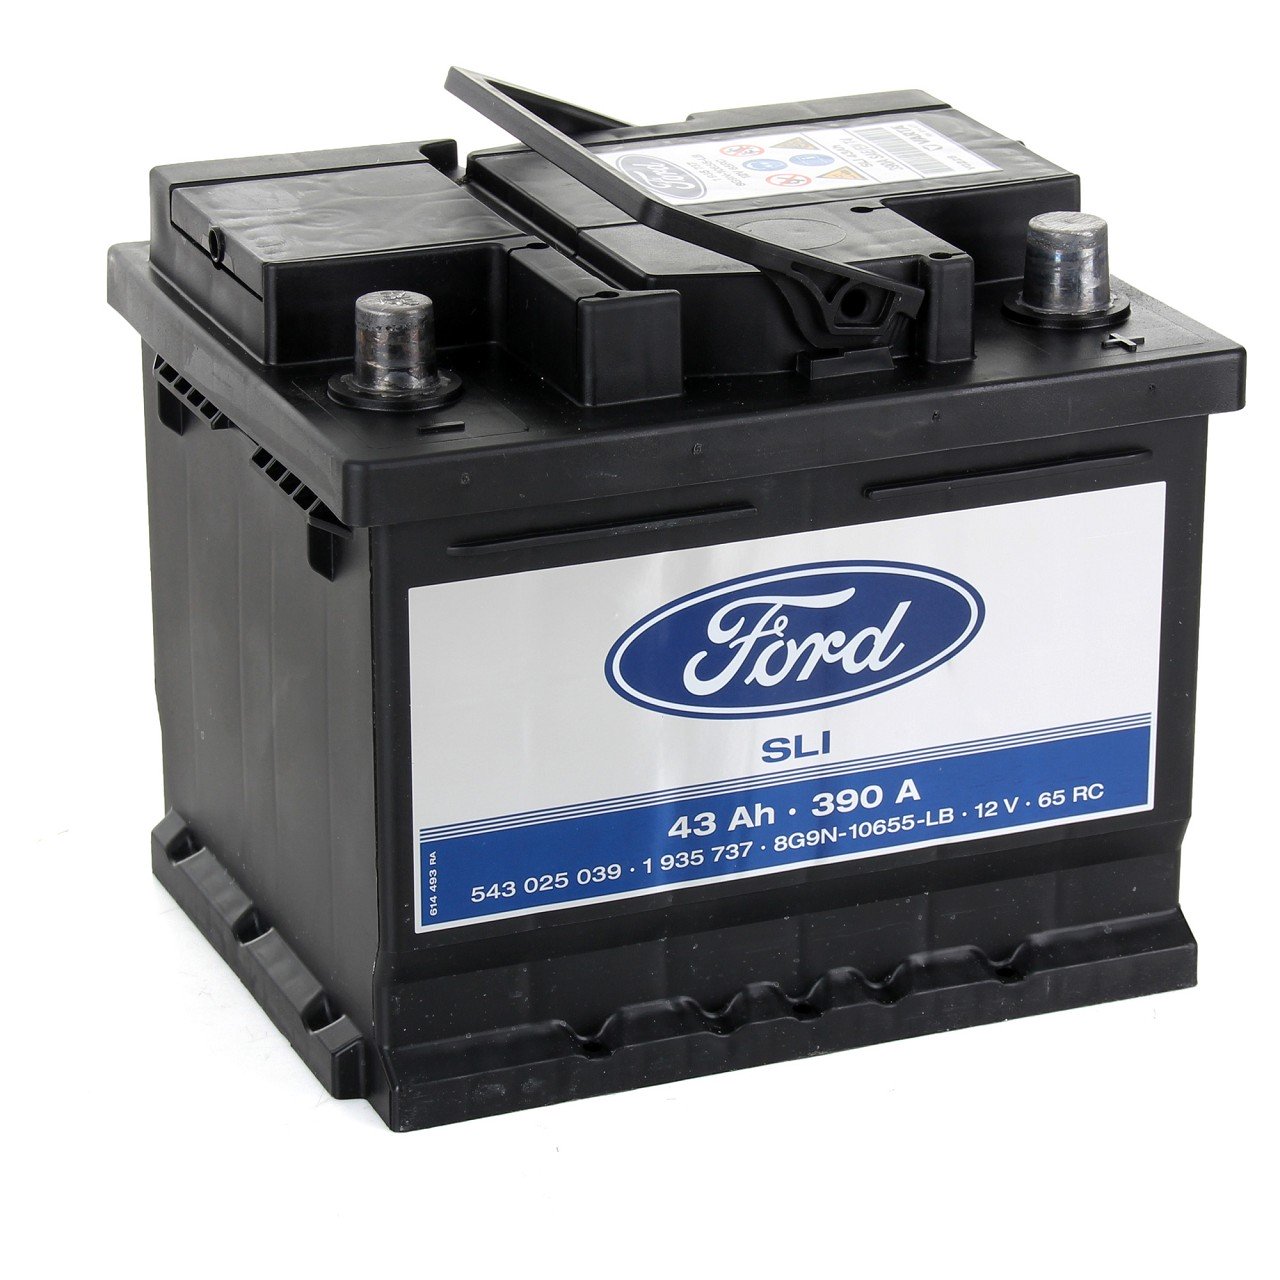 ORIGINAL Ford Autobatterie Batterie Starterbatterie 12V 43Ah 390A 1935737